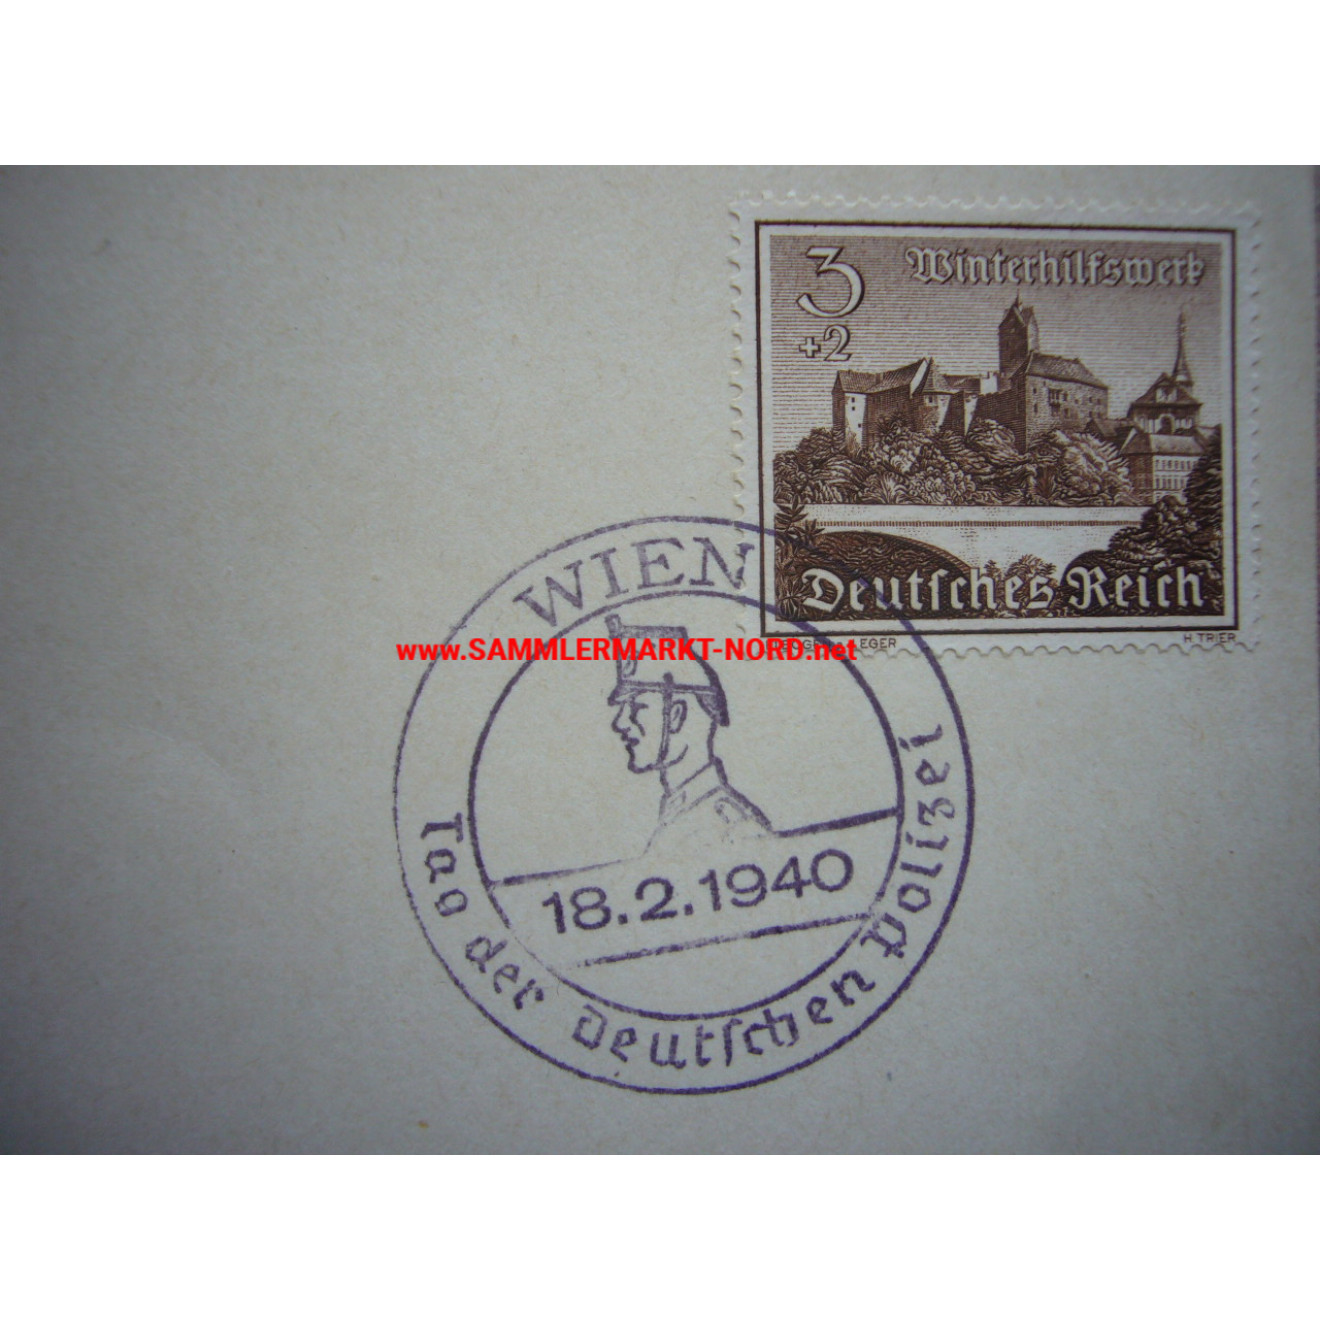 Vienna - German Police Day 1940 - Special postmark